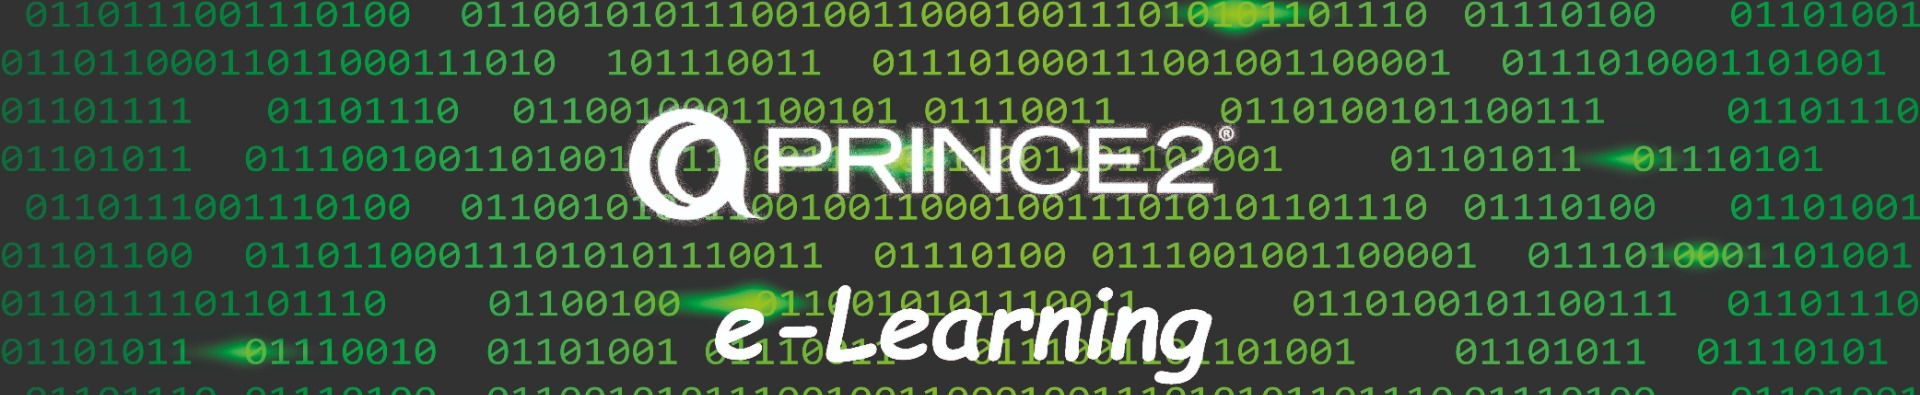 PRINCE2 7 e-Learning training course